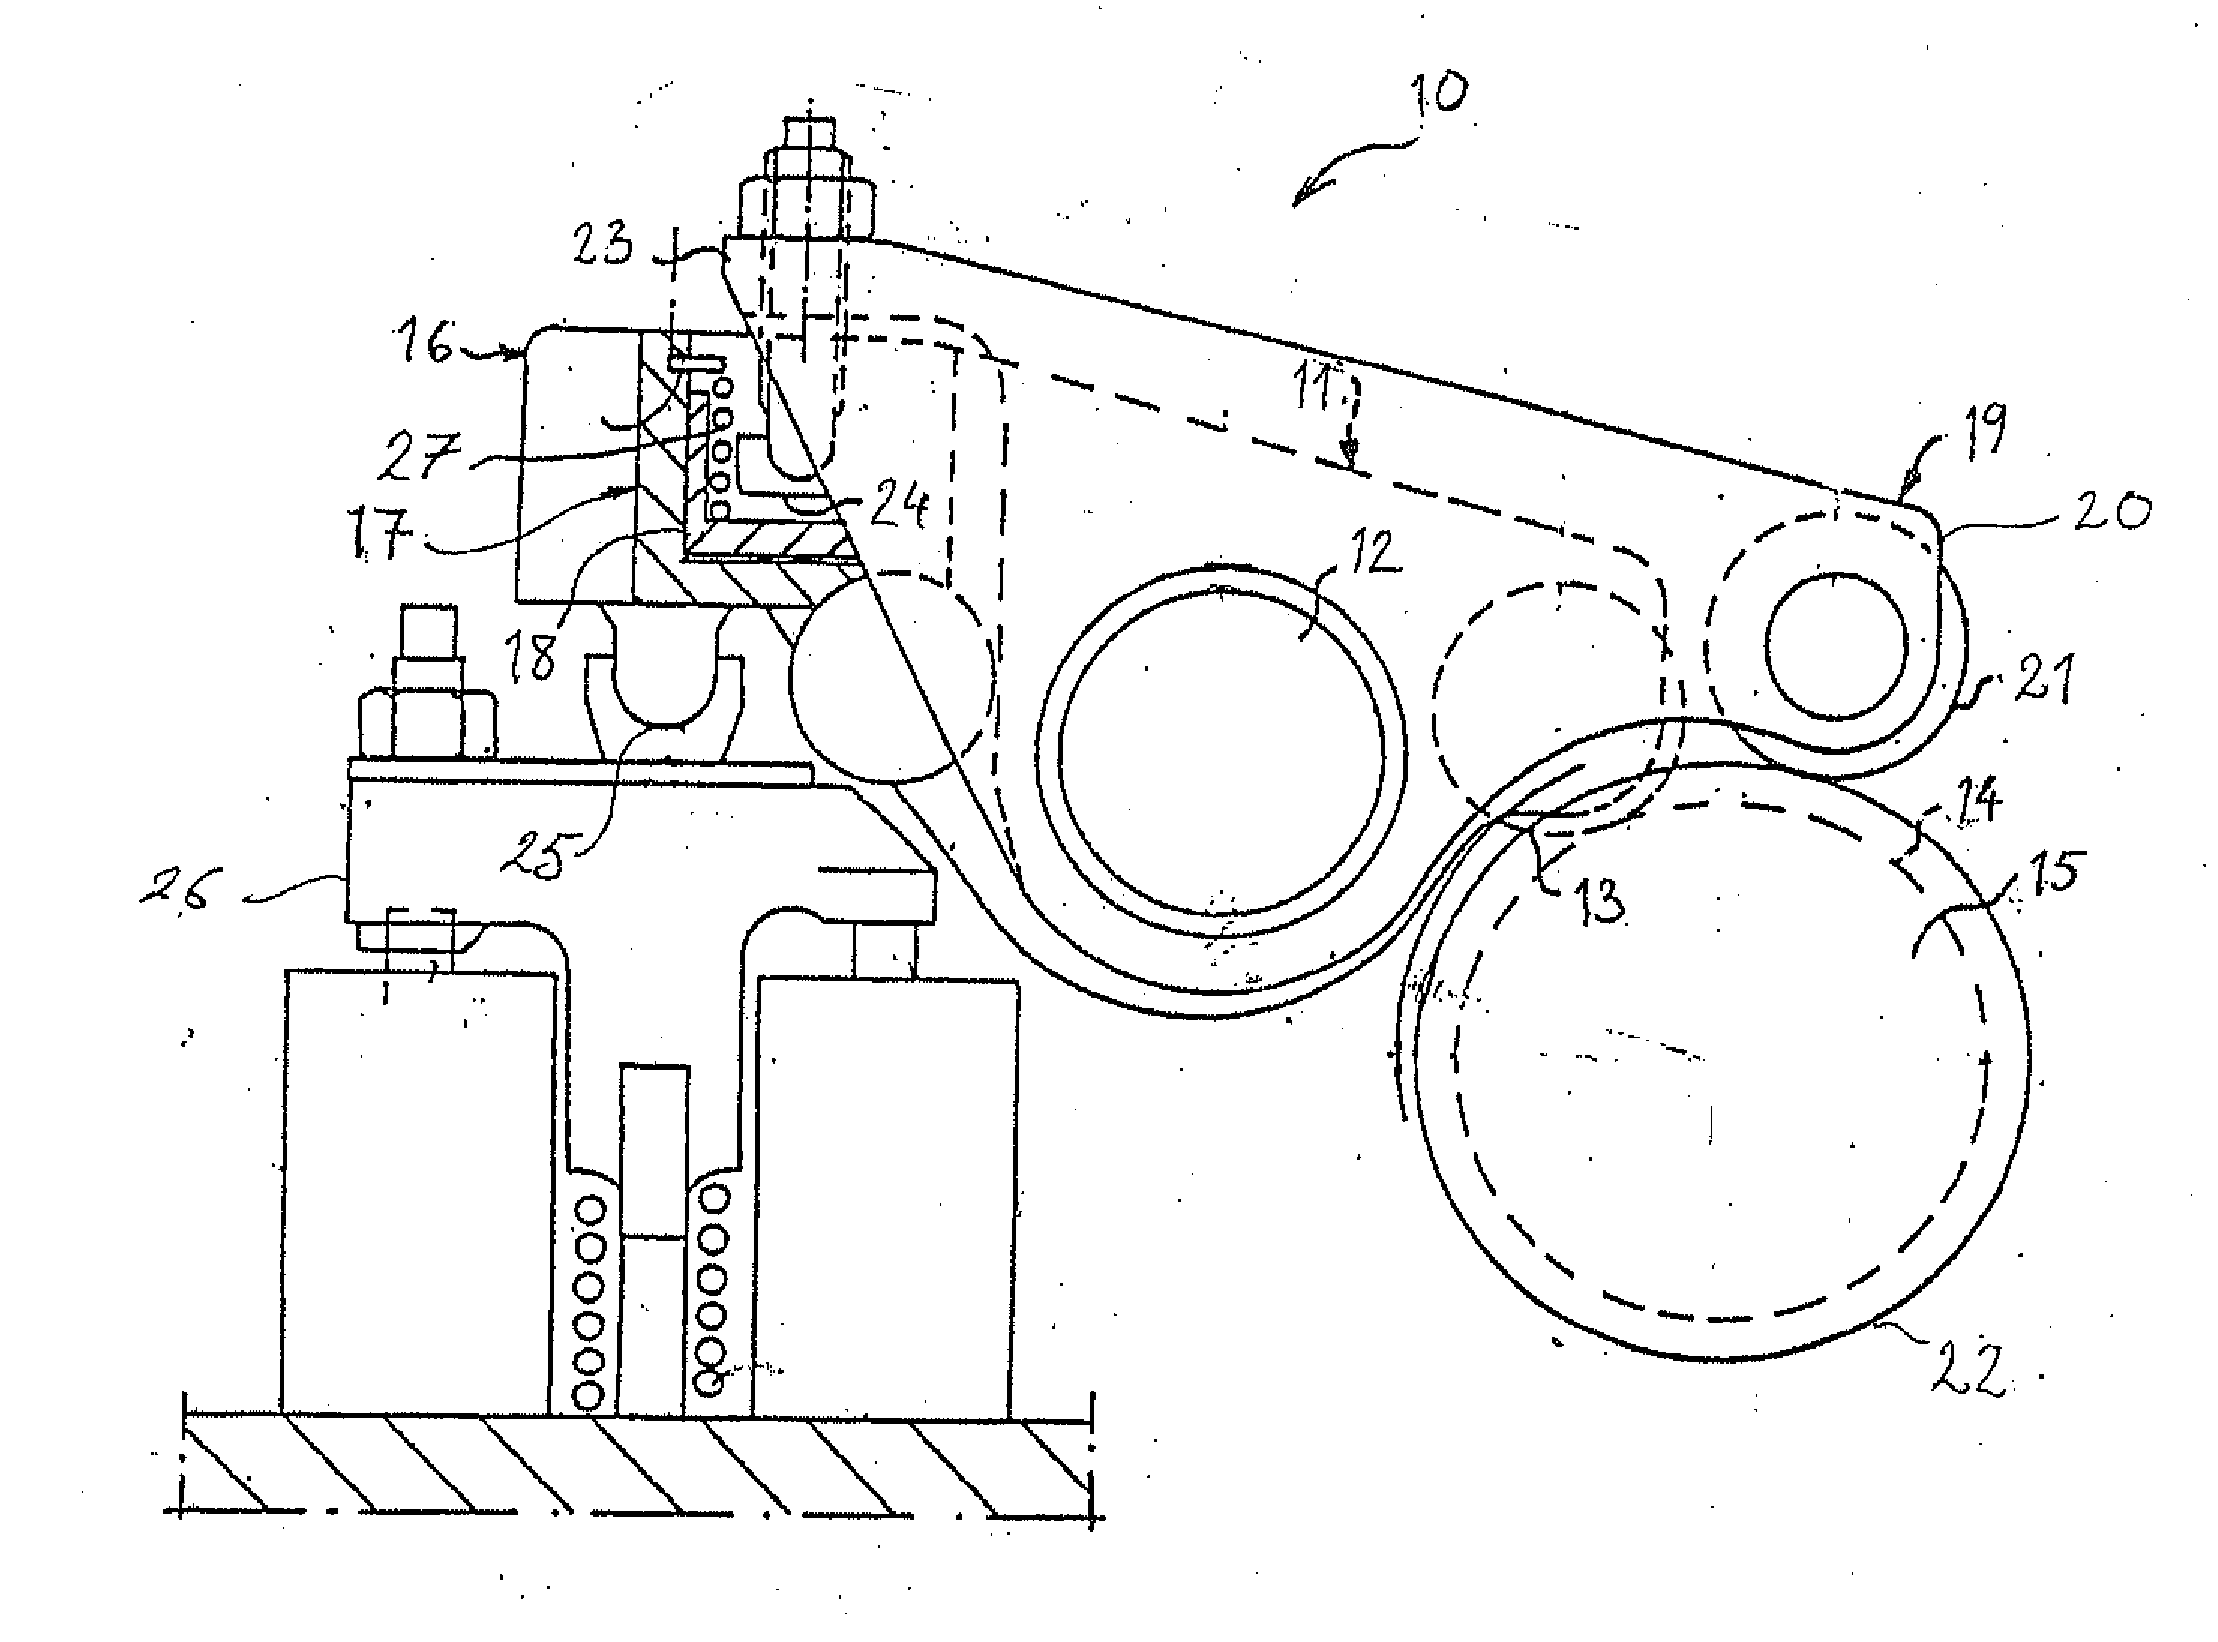 Exhaust valve mechanism for an internal combustion engine